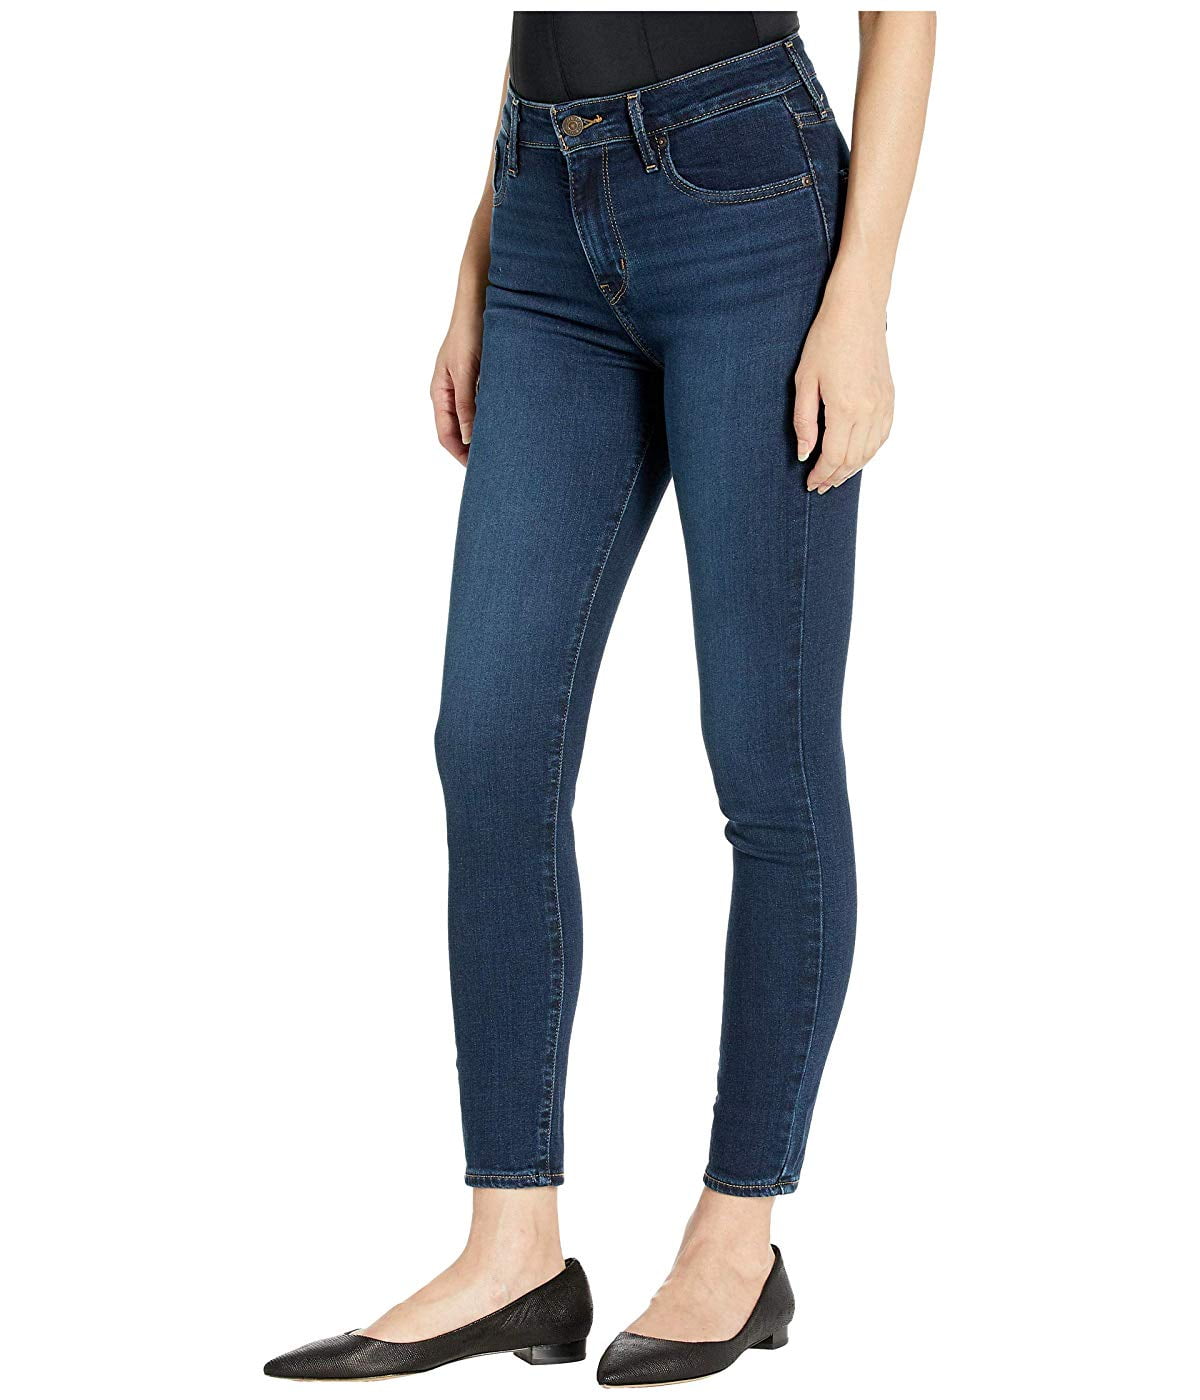 Levi’s Original Red Tab Women's 721 High-Rise Skinny Jeans